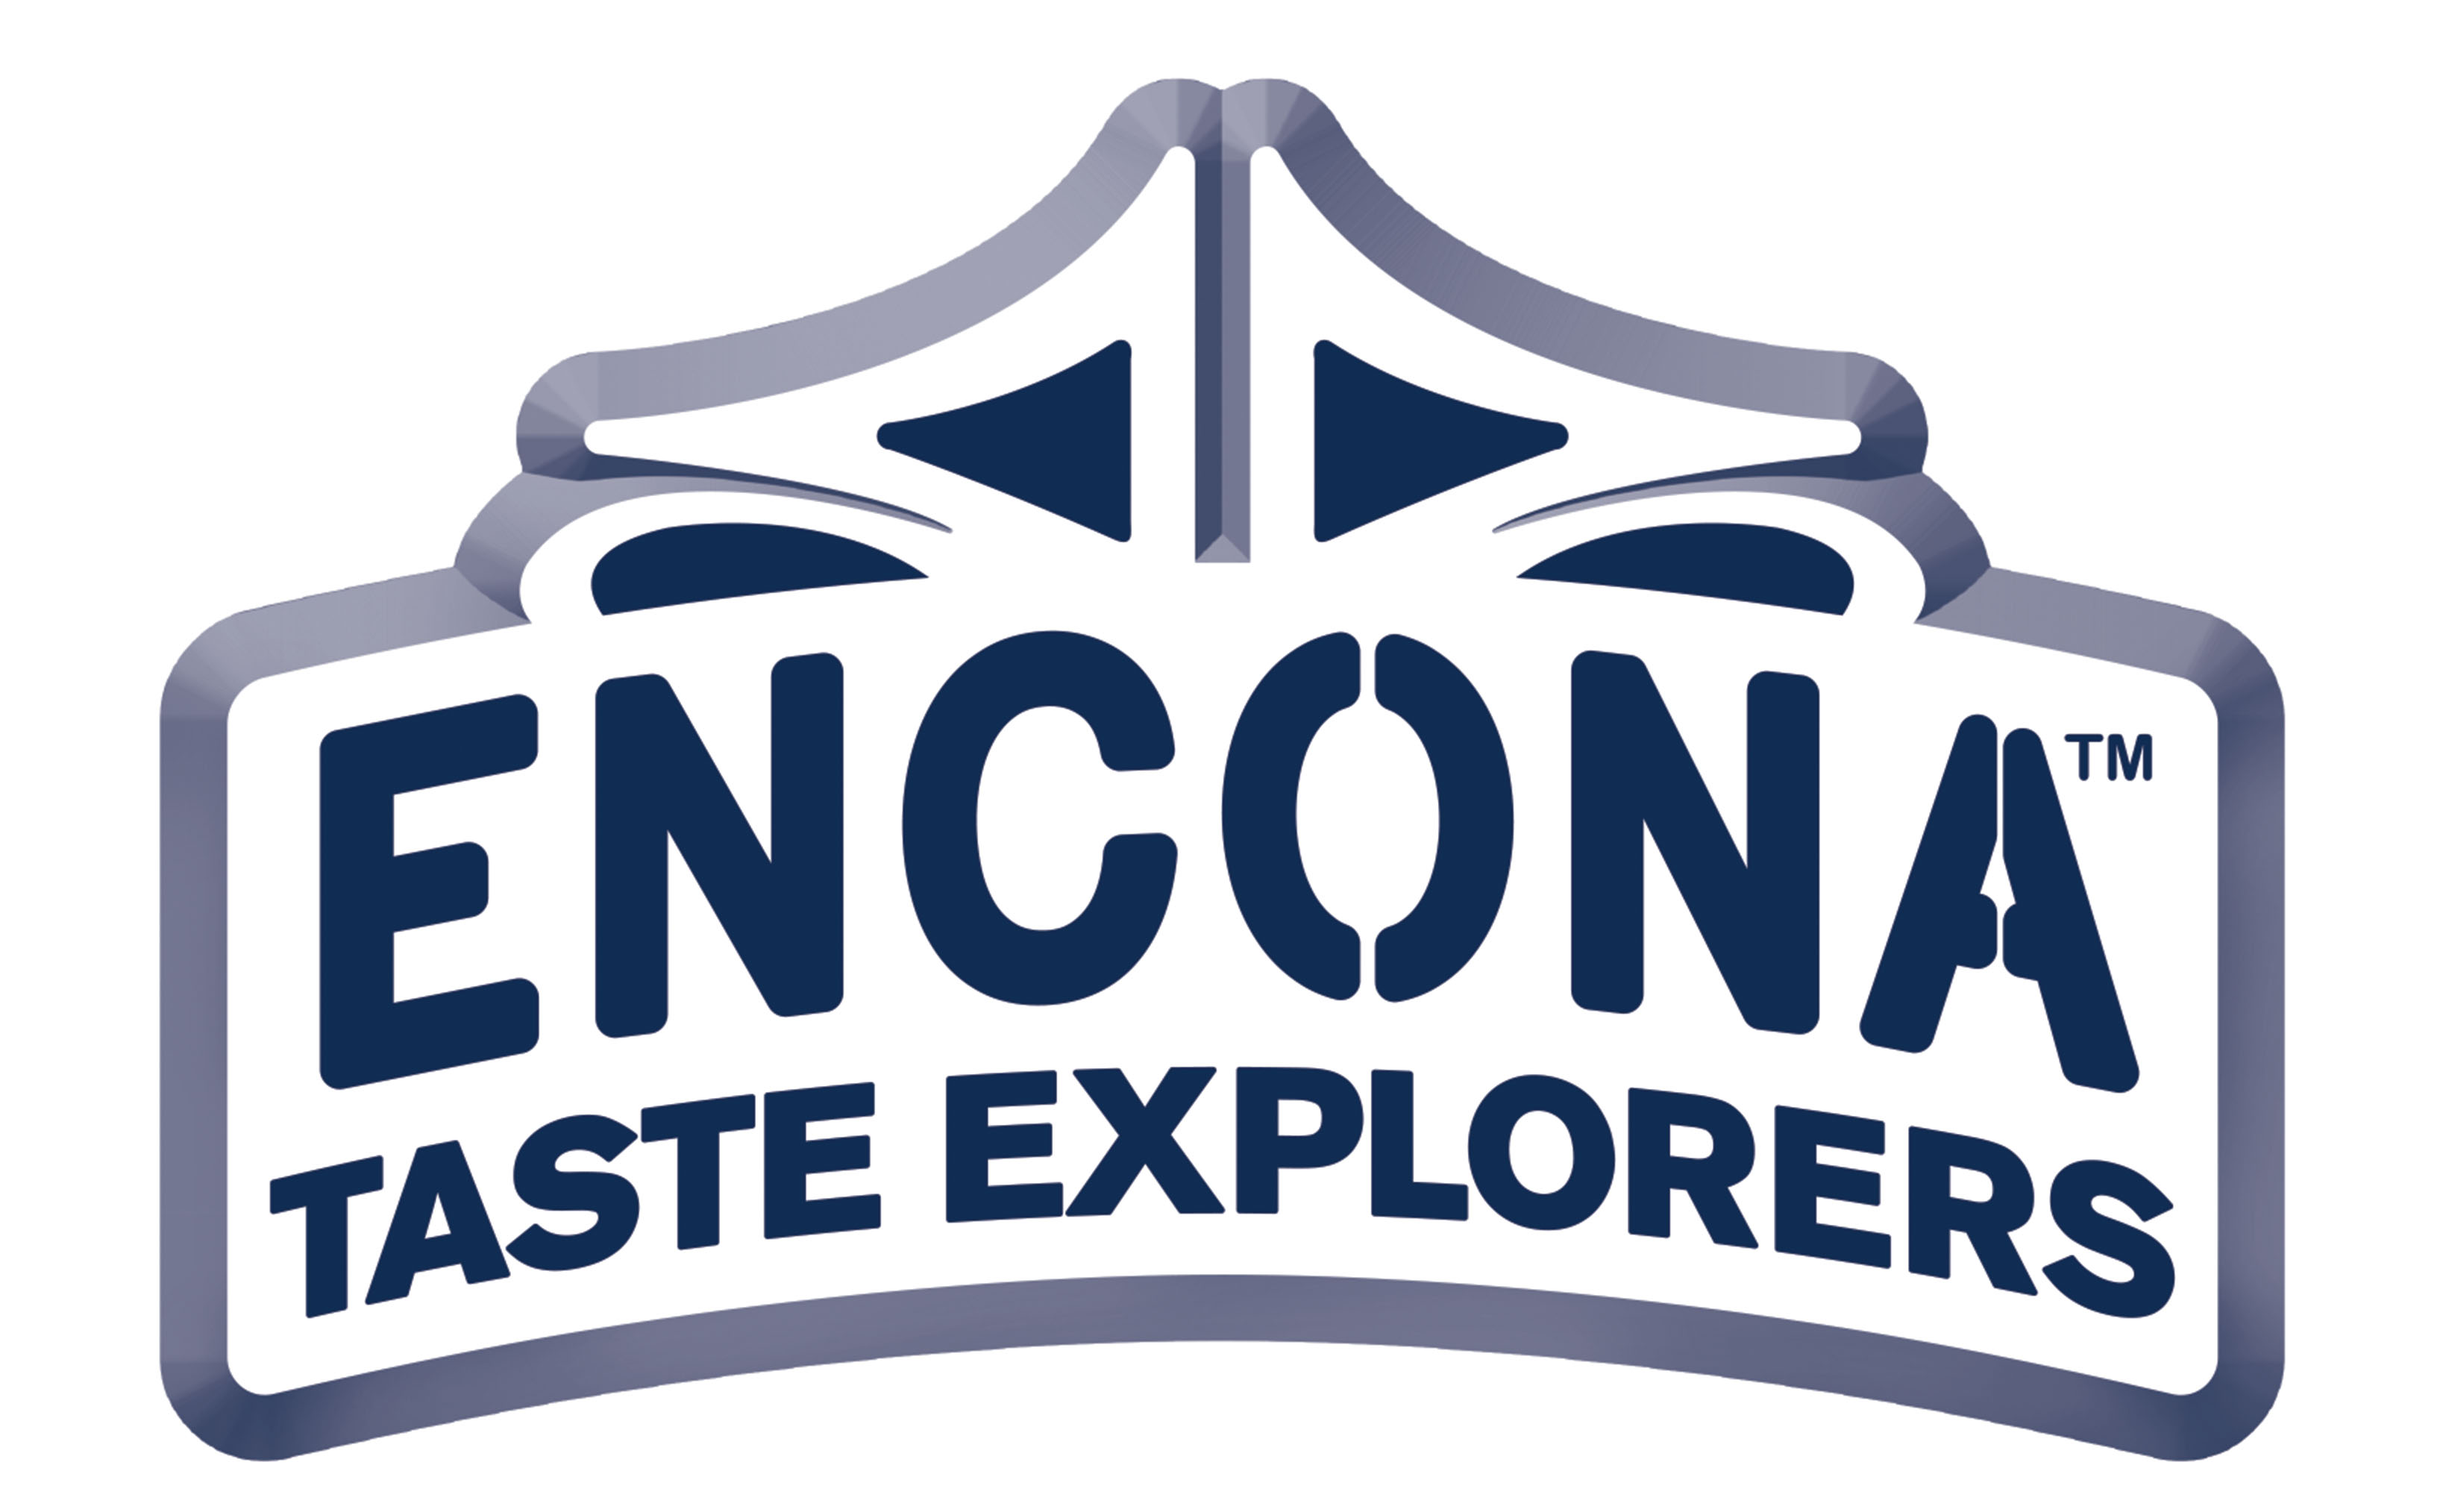 Encona